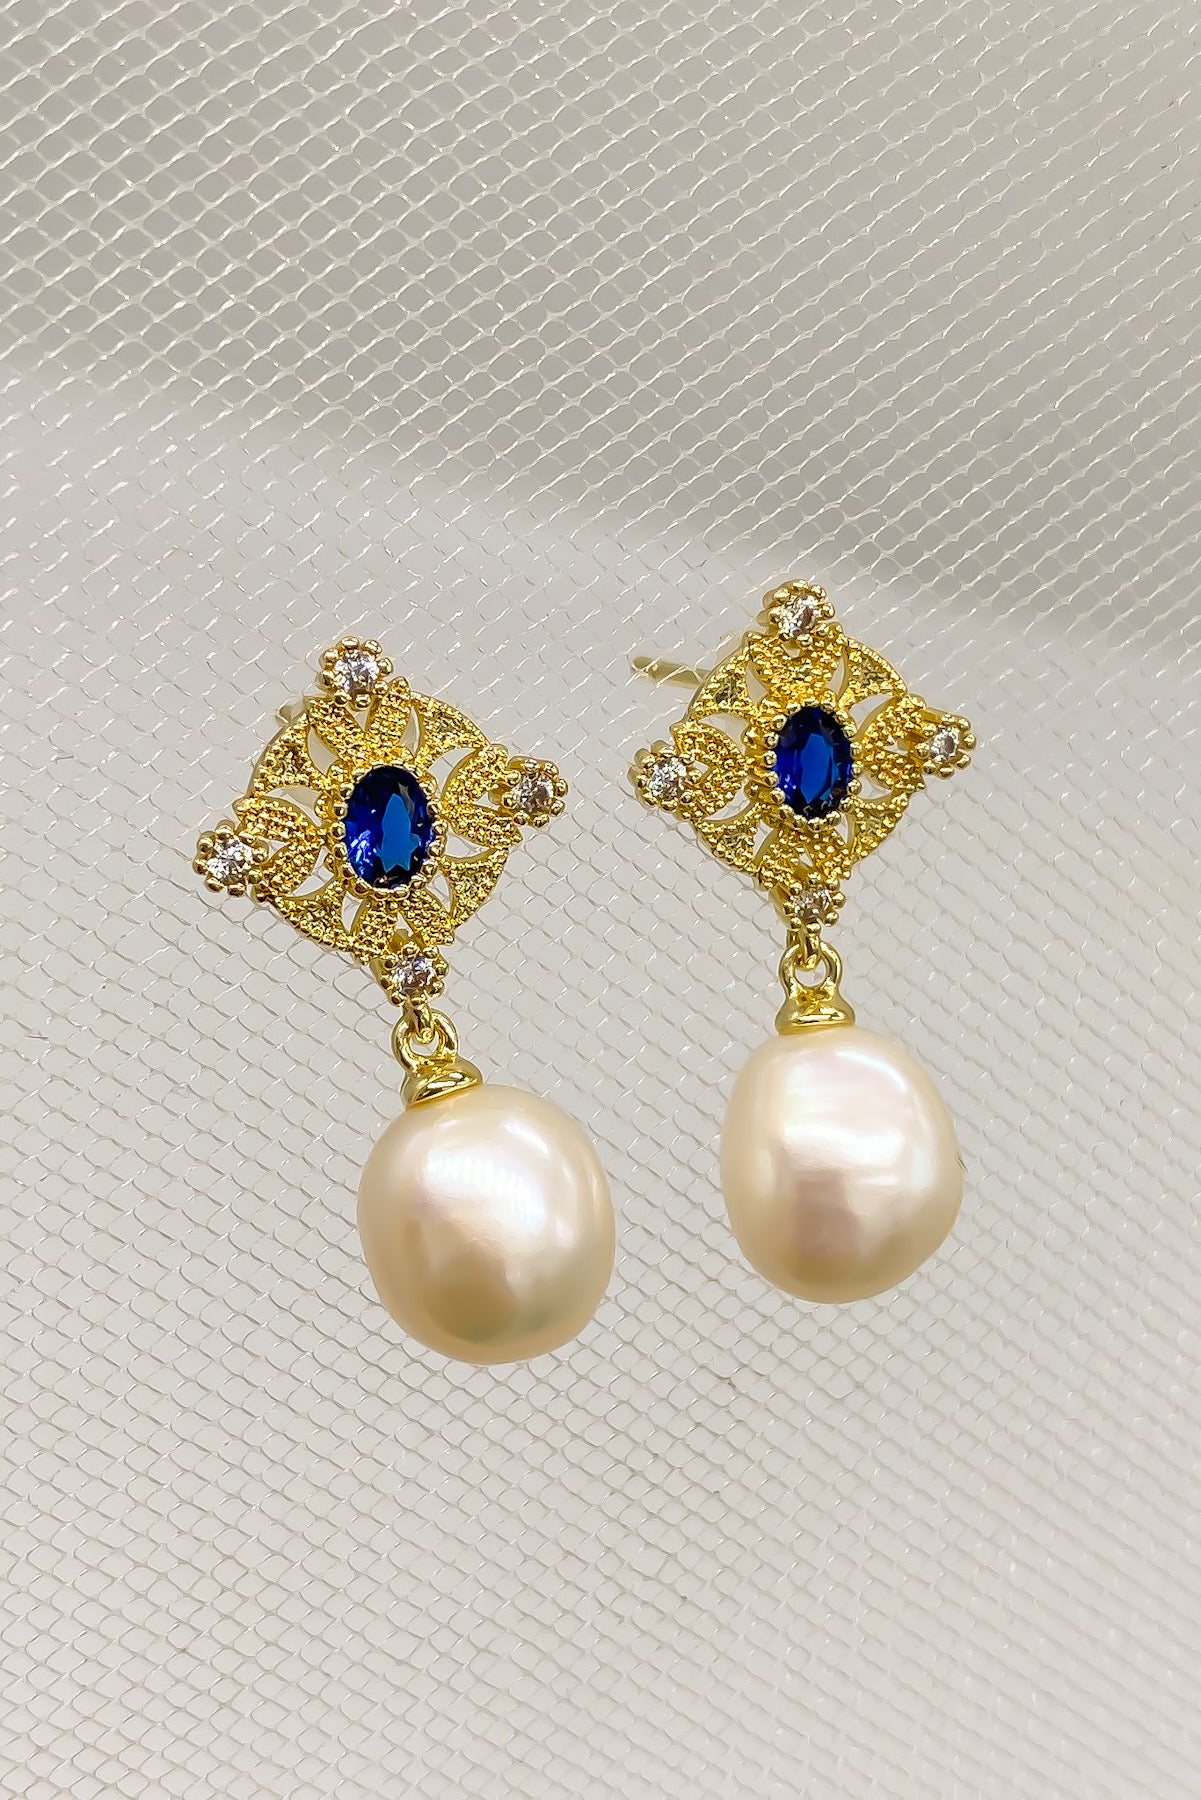 SKYE San Francisco Shop Chic Modern Elegant Classy Women Jewelry French Parisian Minimalist Regine Filigree Crystal Freshwater Pearl Earrings 5